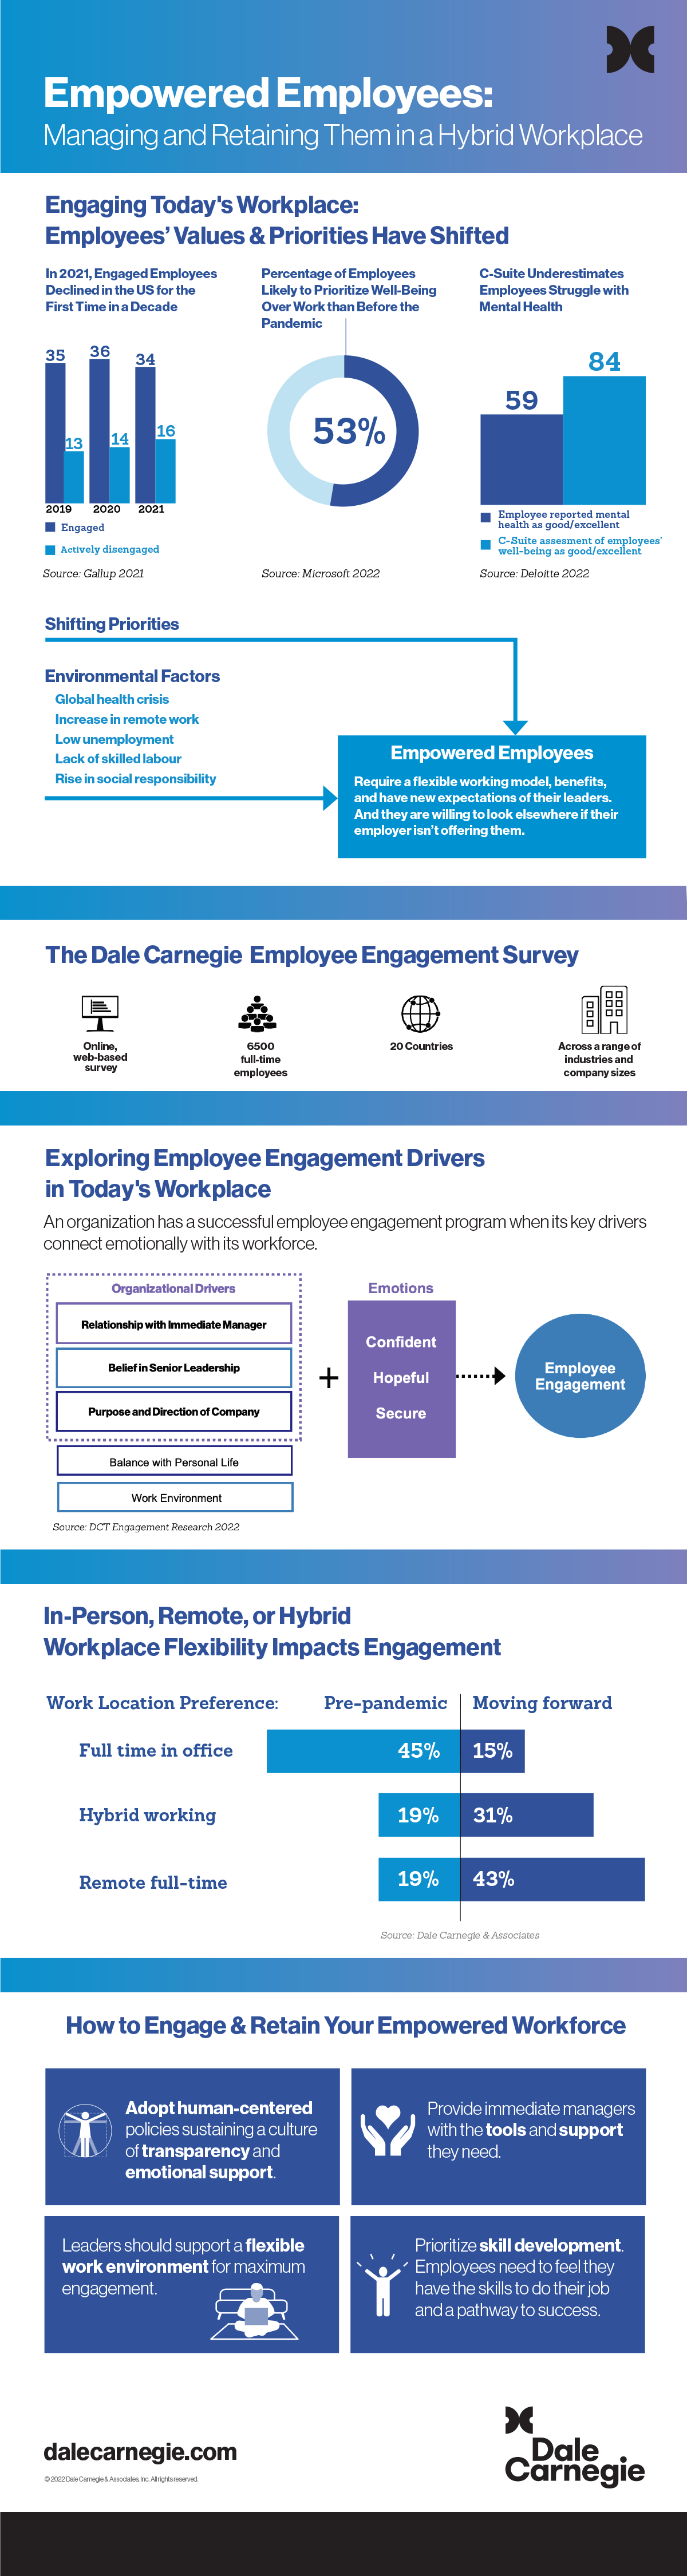 Employee engagement infographic